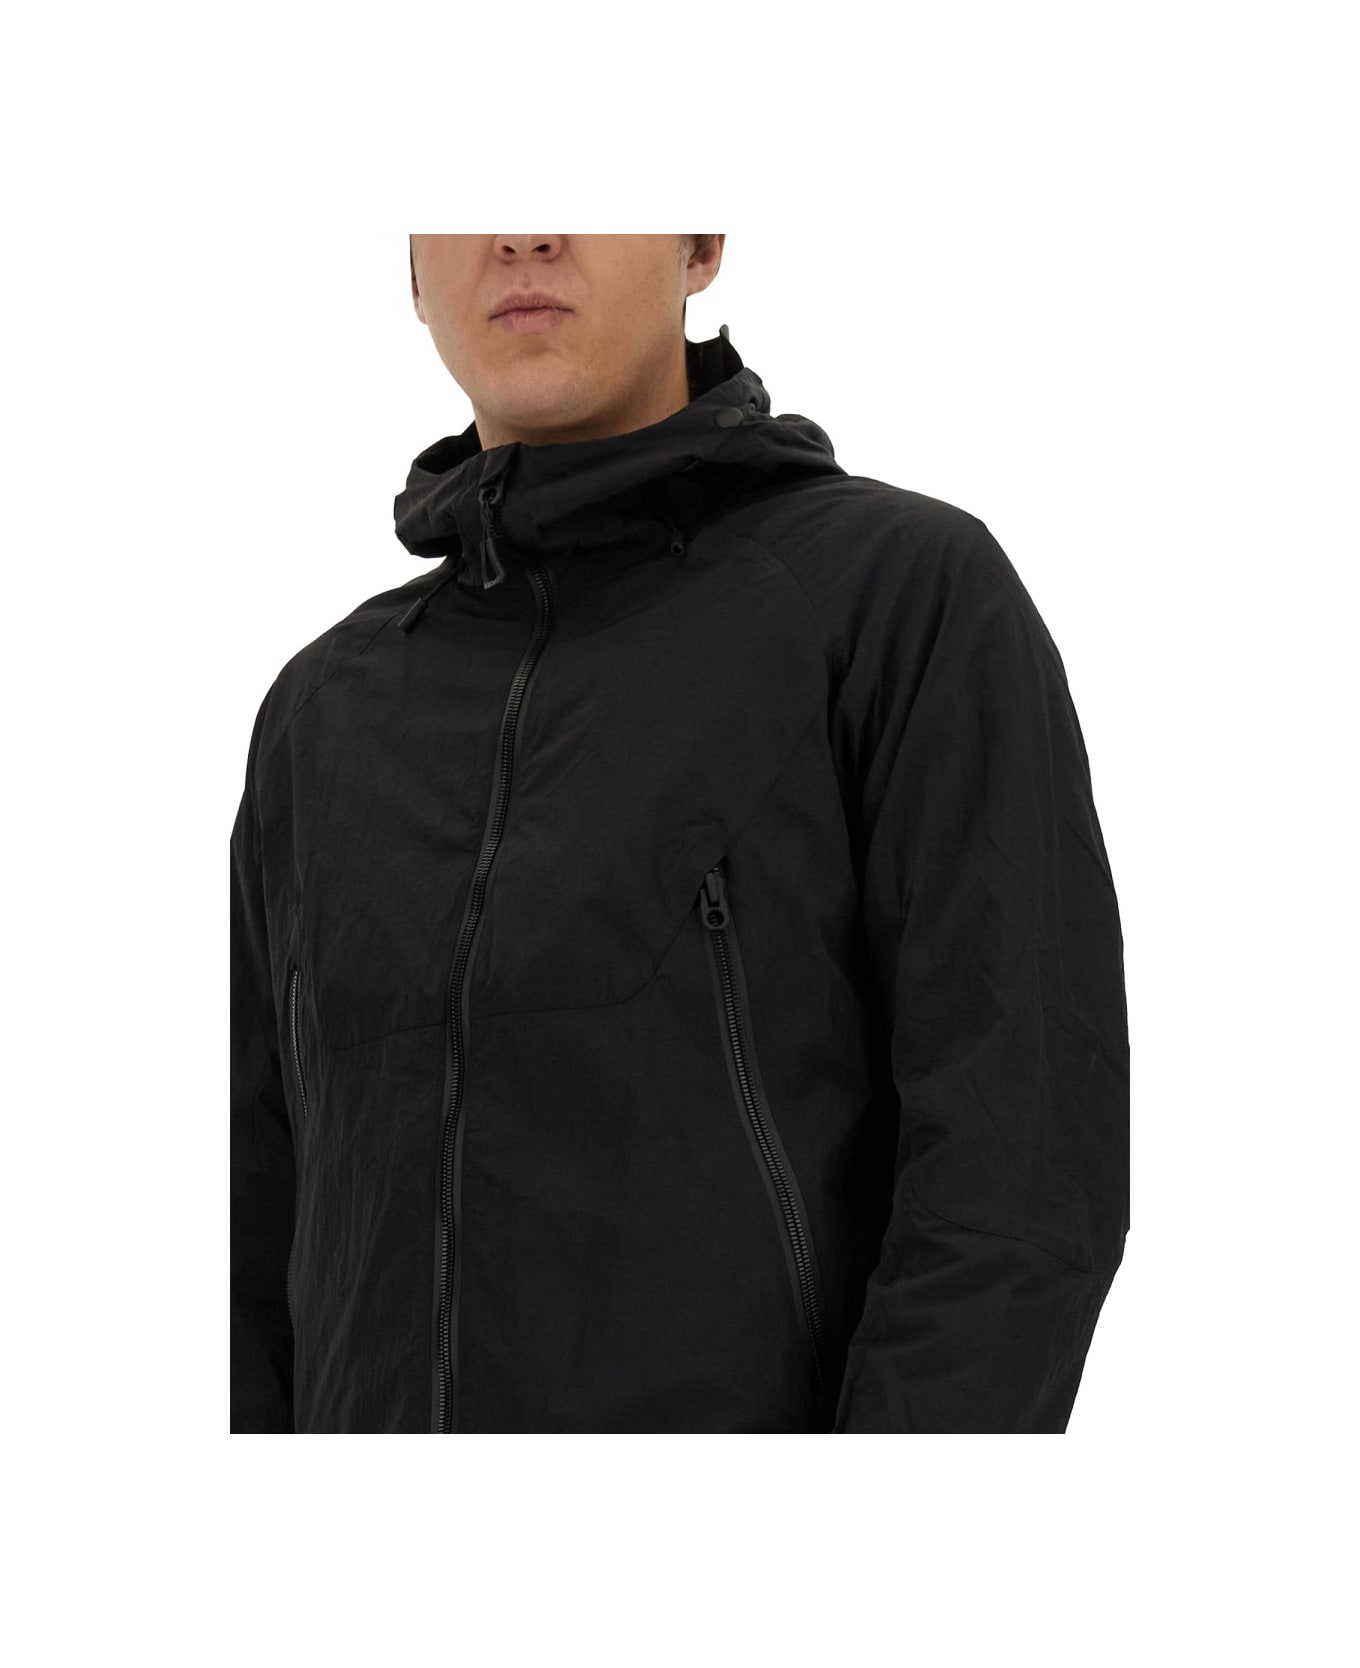 JG1 Hooded Jacket - BLACK ジャケット